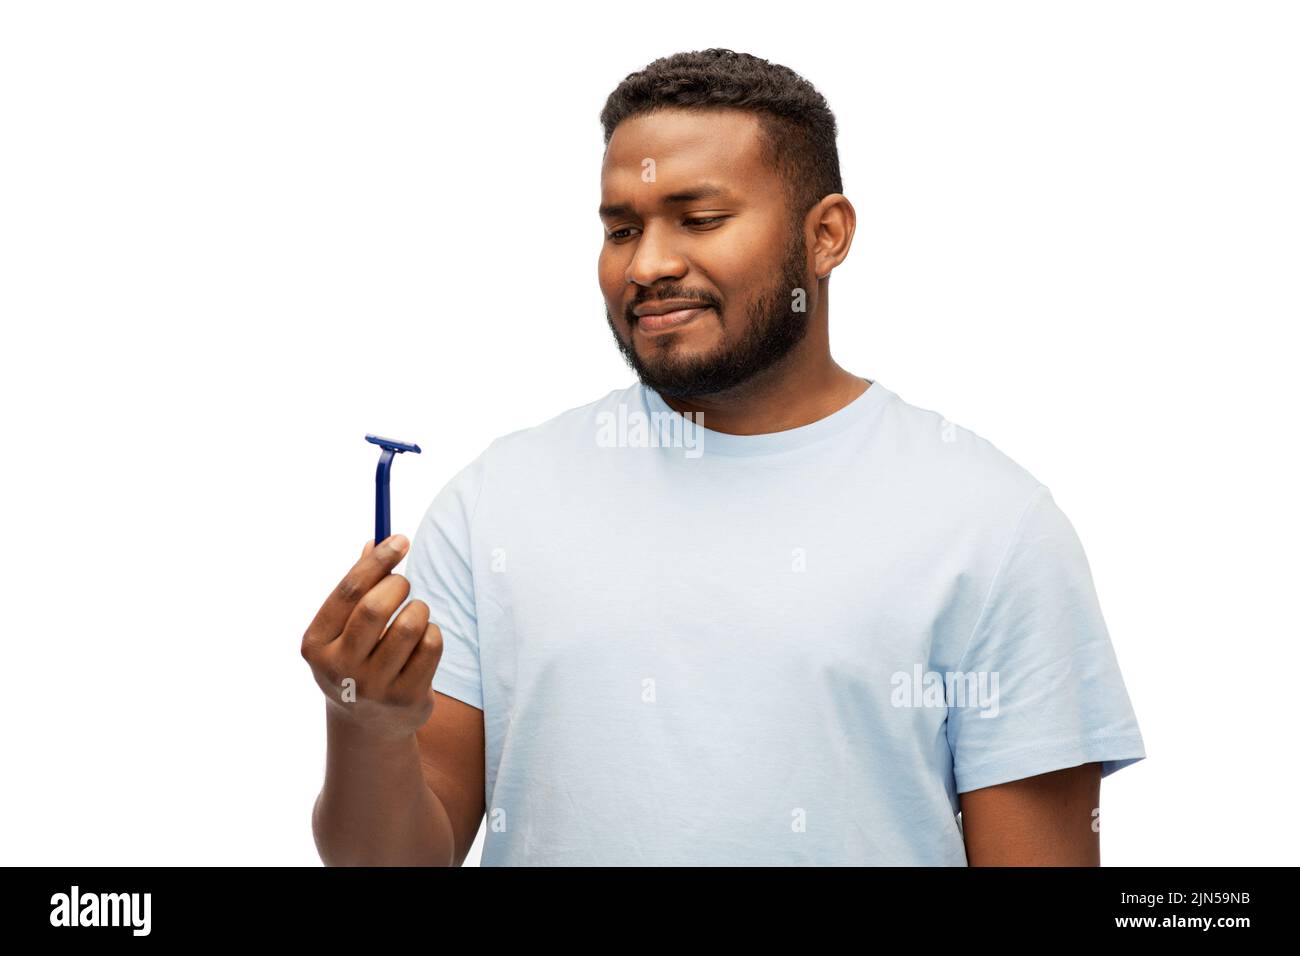 african american man holding razor blade Stock Photo